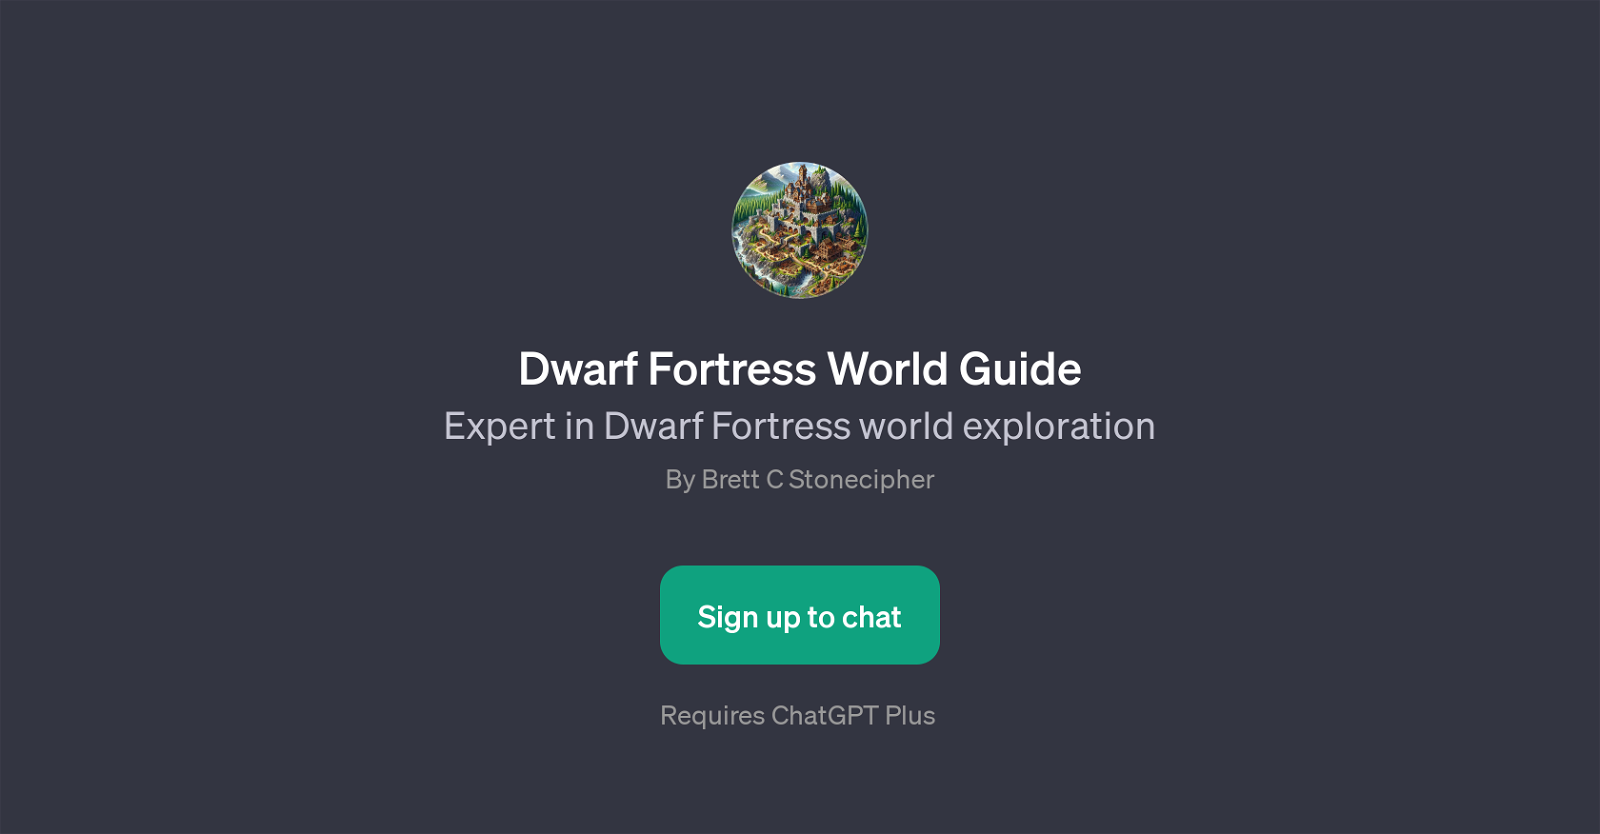 Dwarf Fortress World Guide website